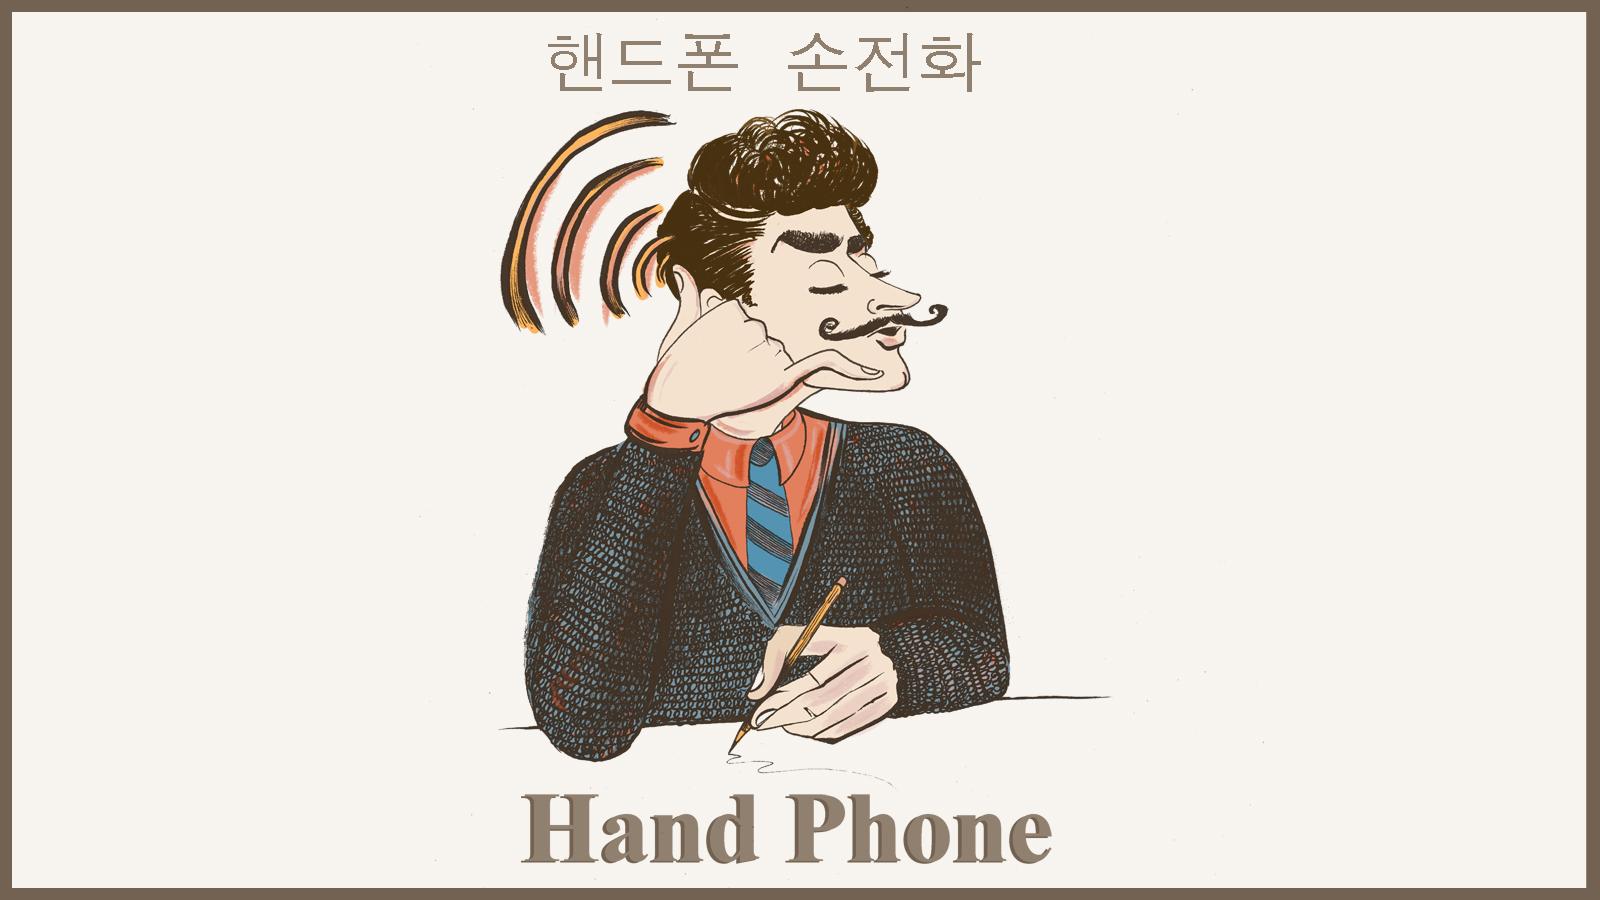 hand phone illustration by  Leslie Agan